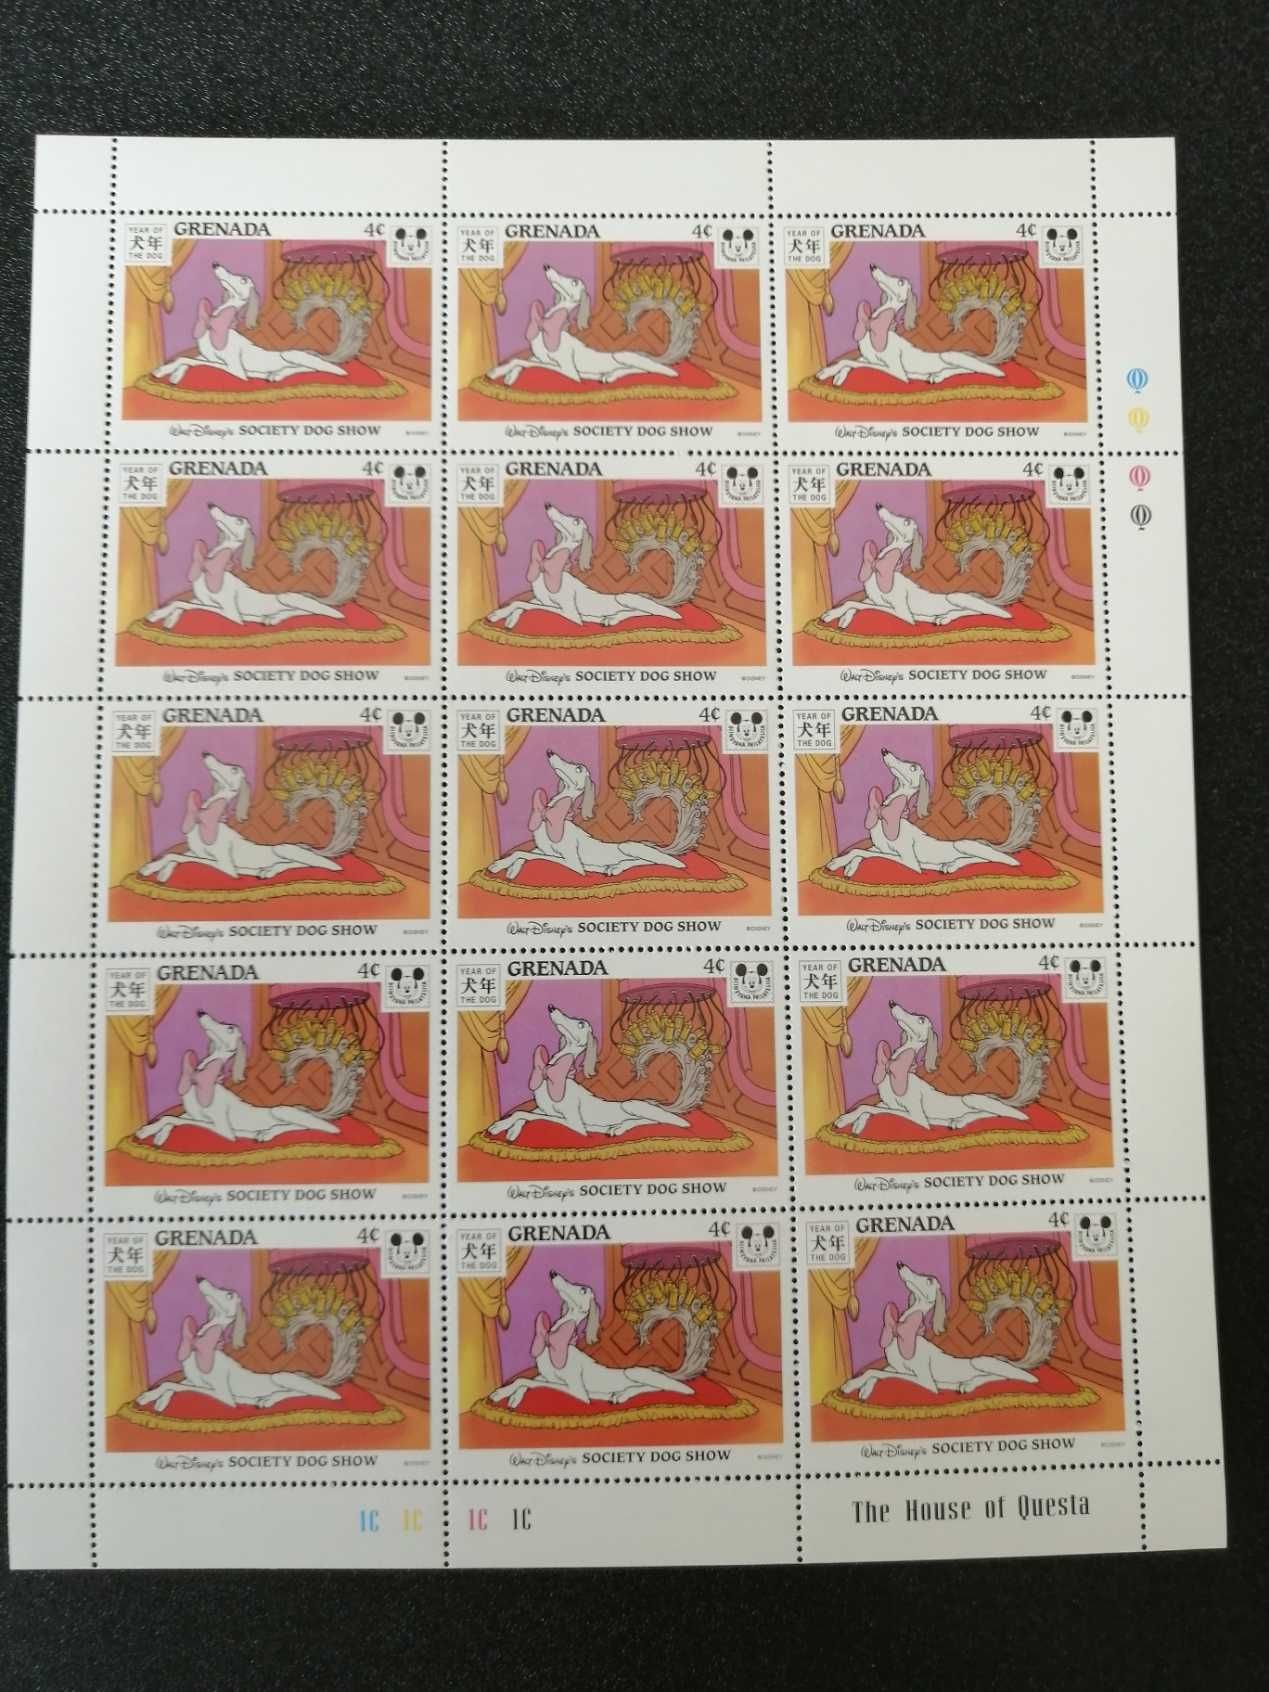 Disney Mickey Donald Pateta folhas completas selos de diversos países